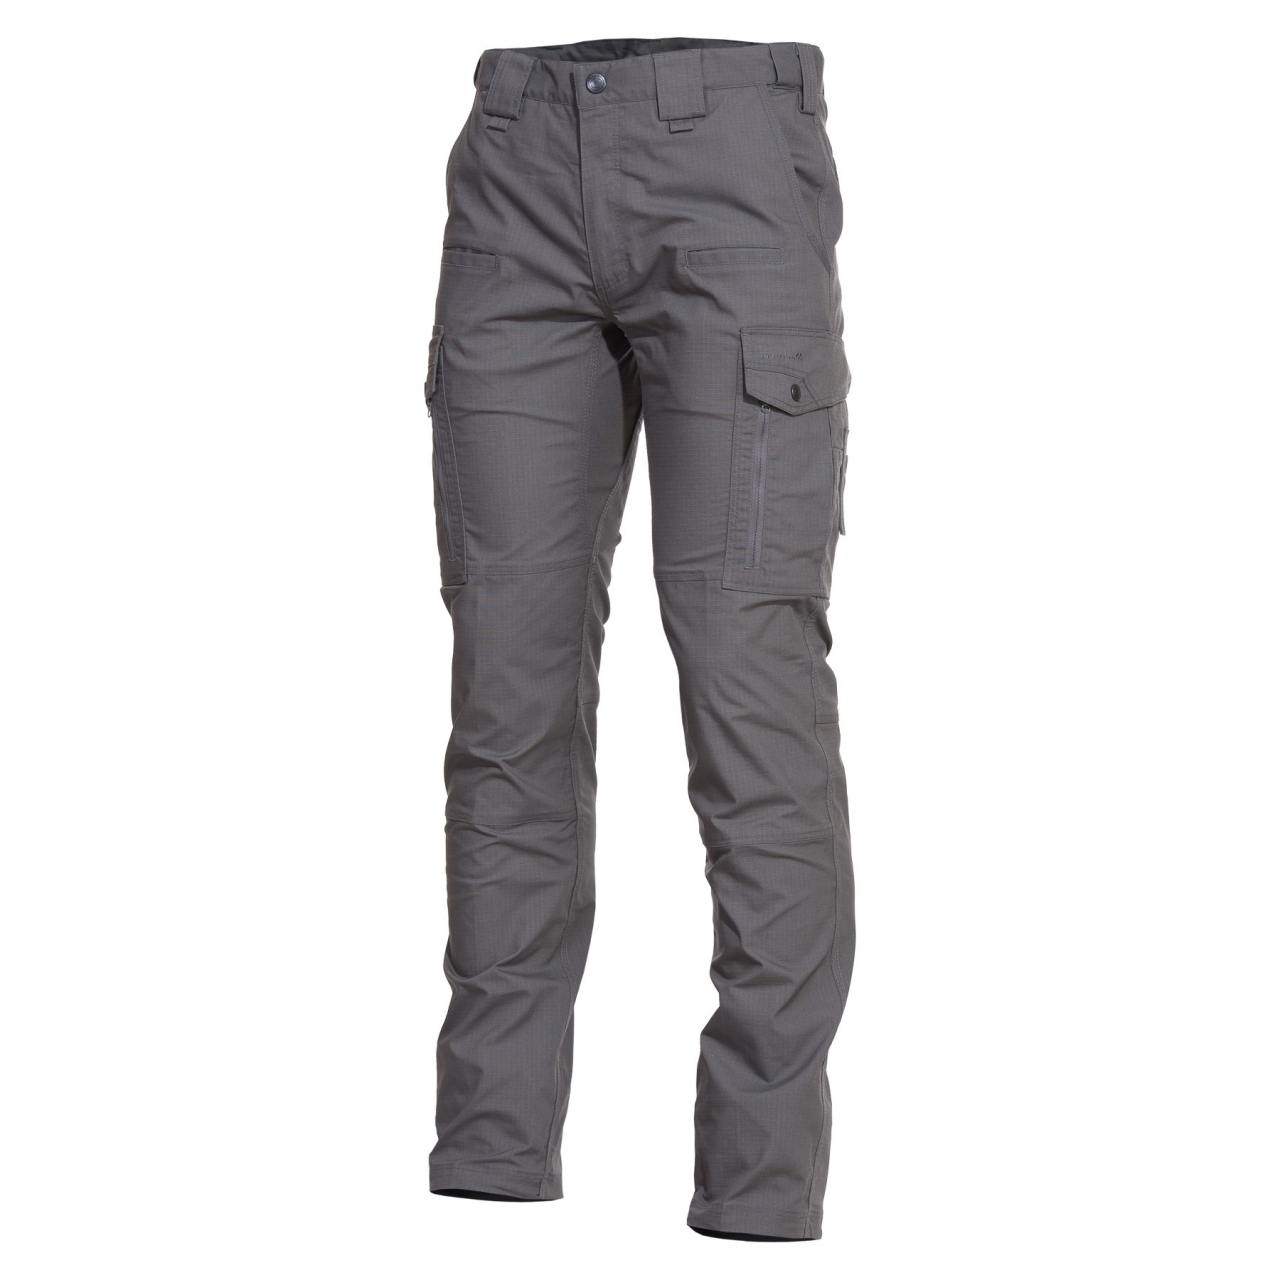 Kalhoty Pentagon Ranger 2.0 - šedé, 40 L